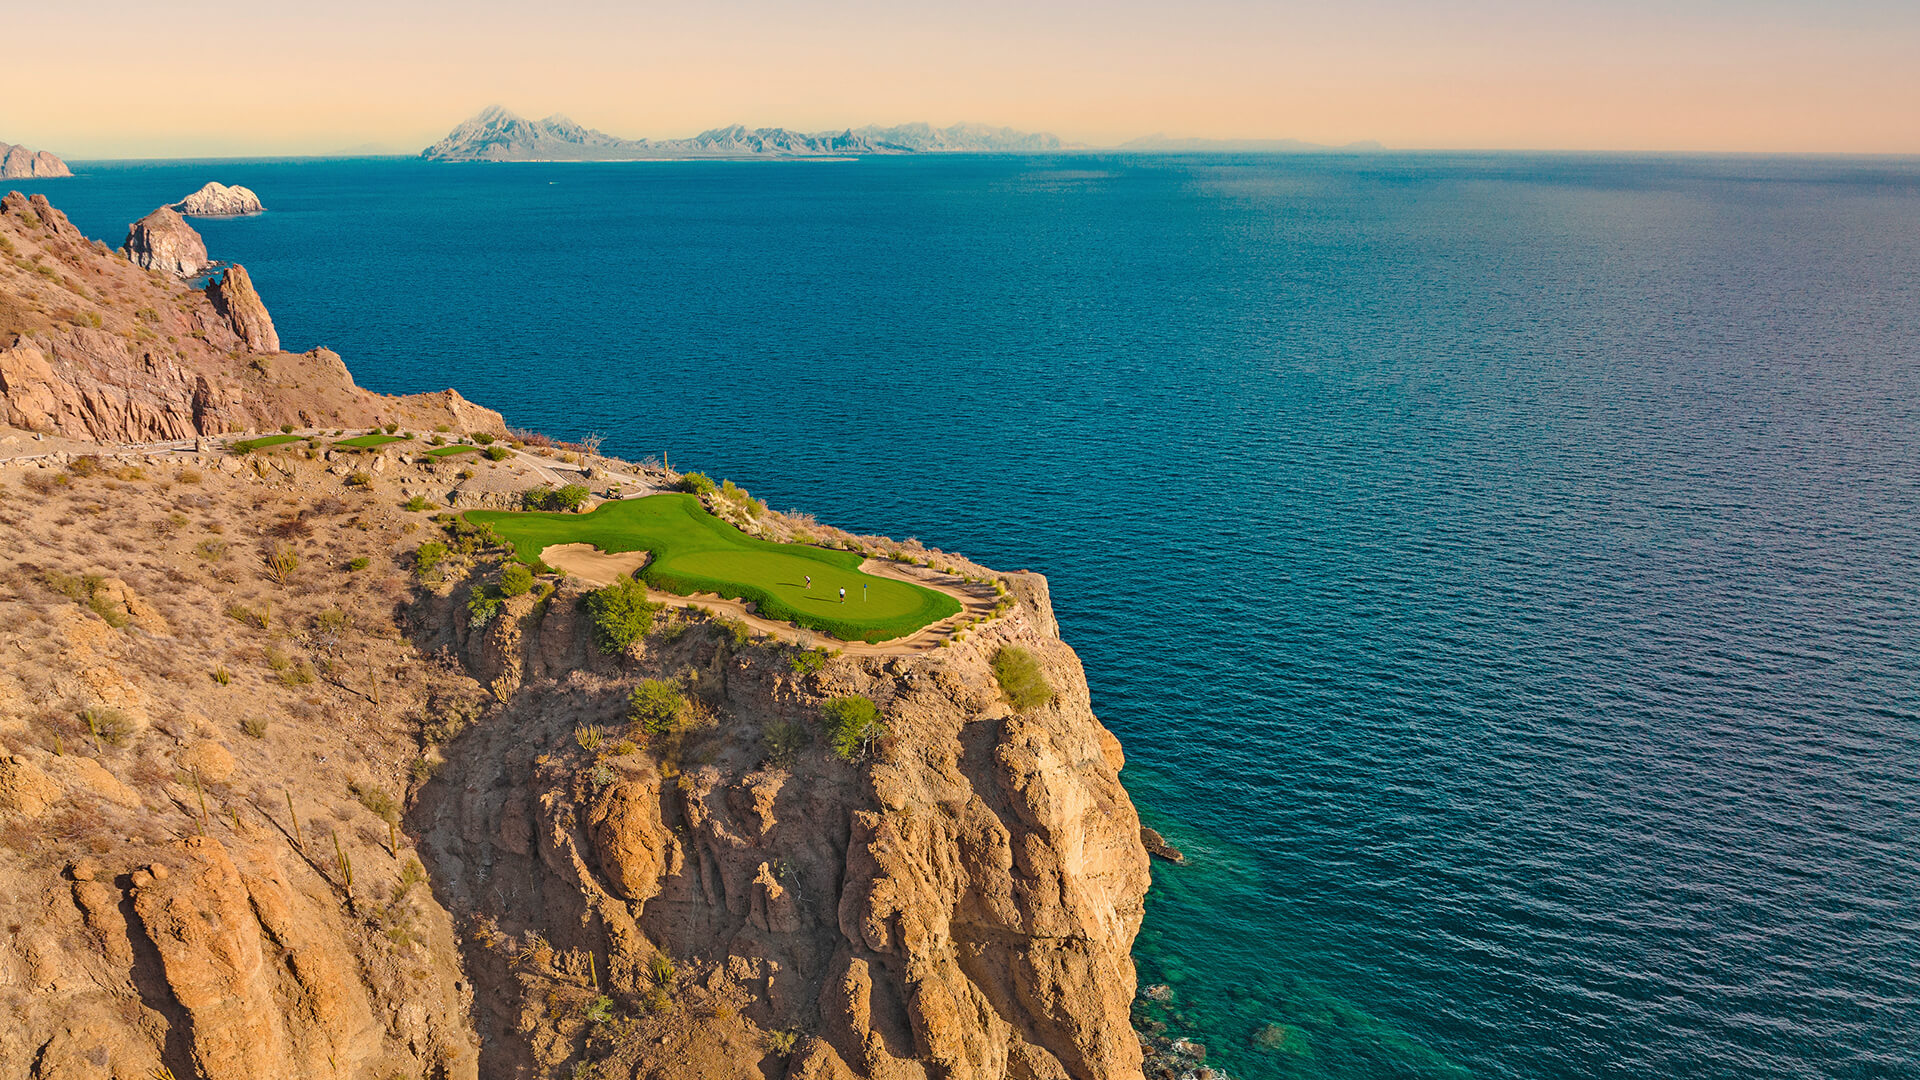 Golf in Villa del Palmar at The Islands of Loreto